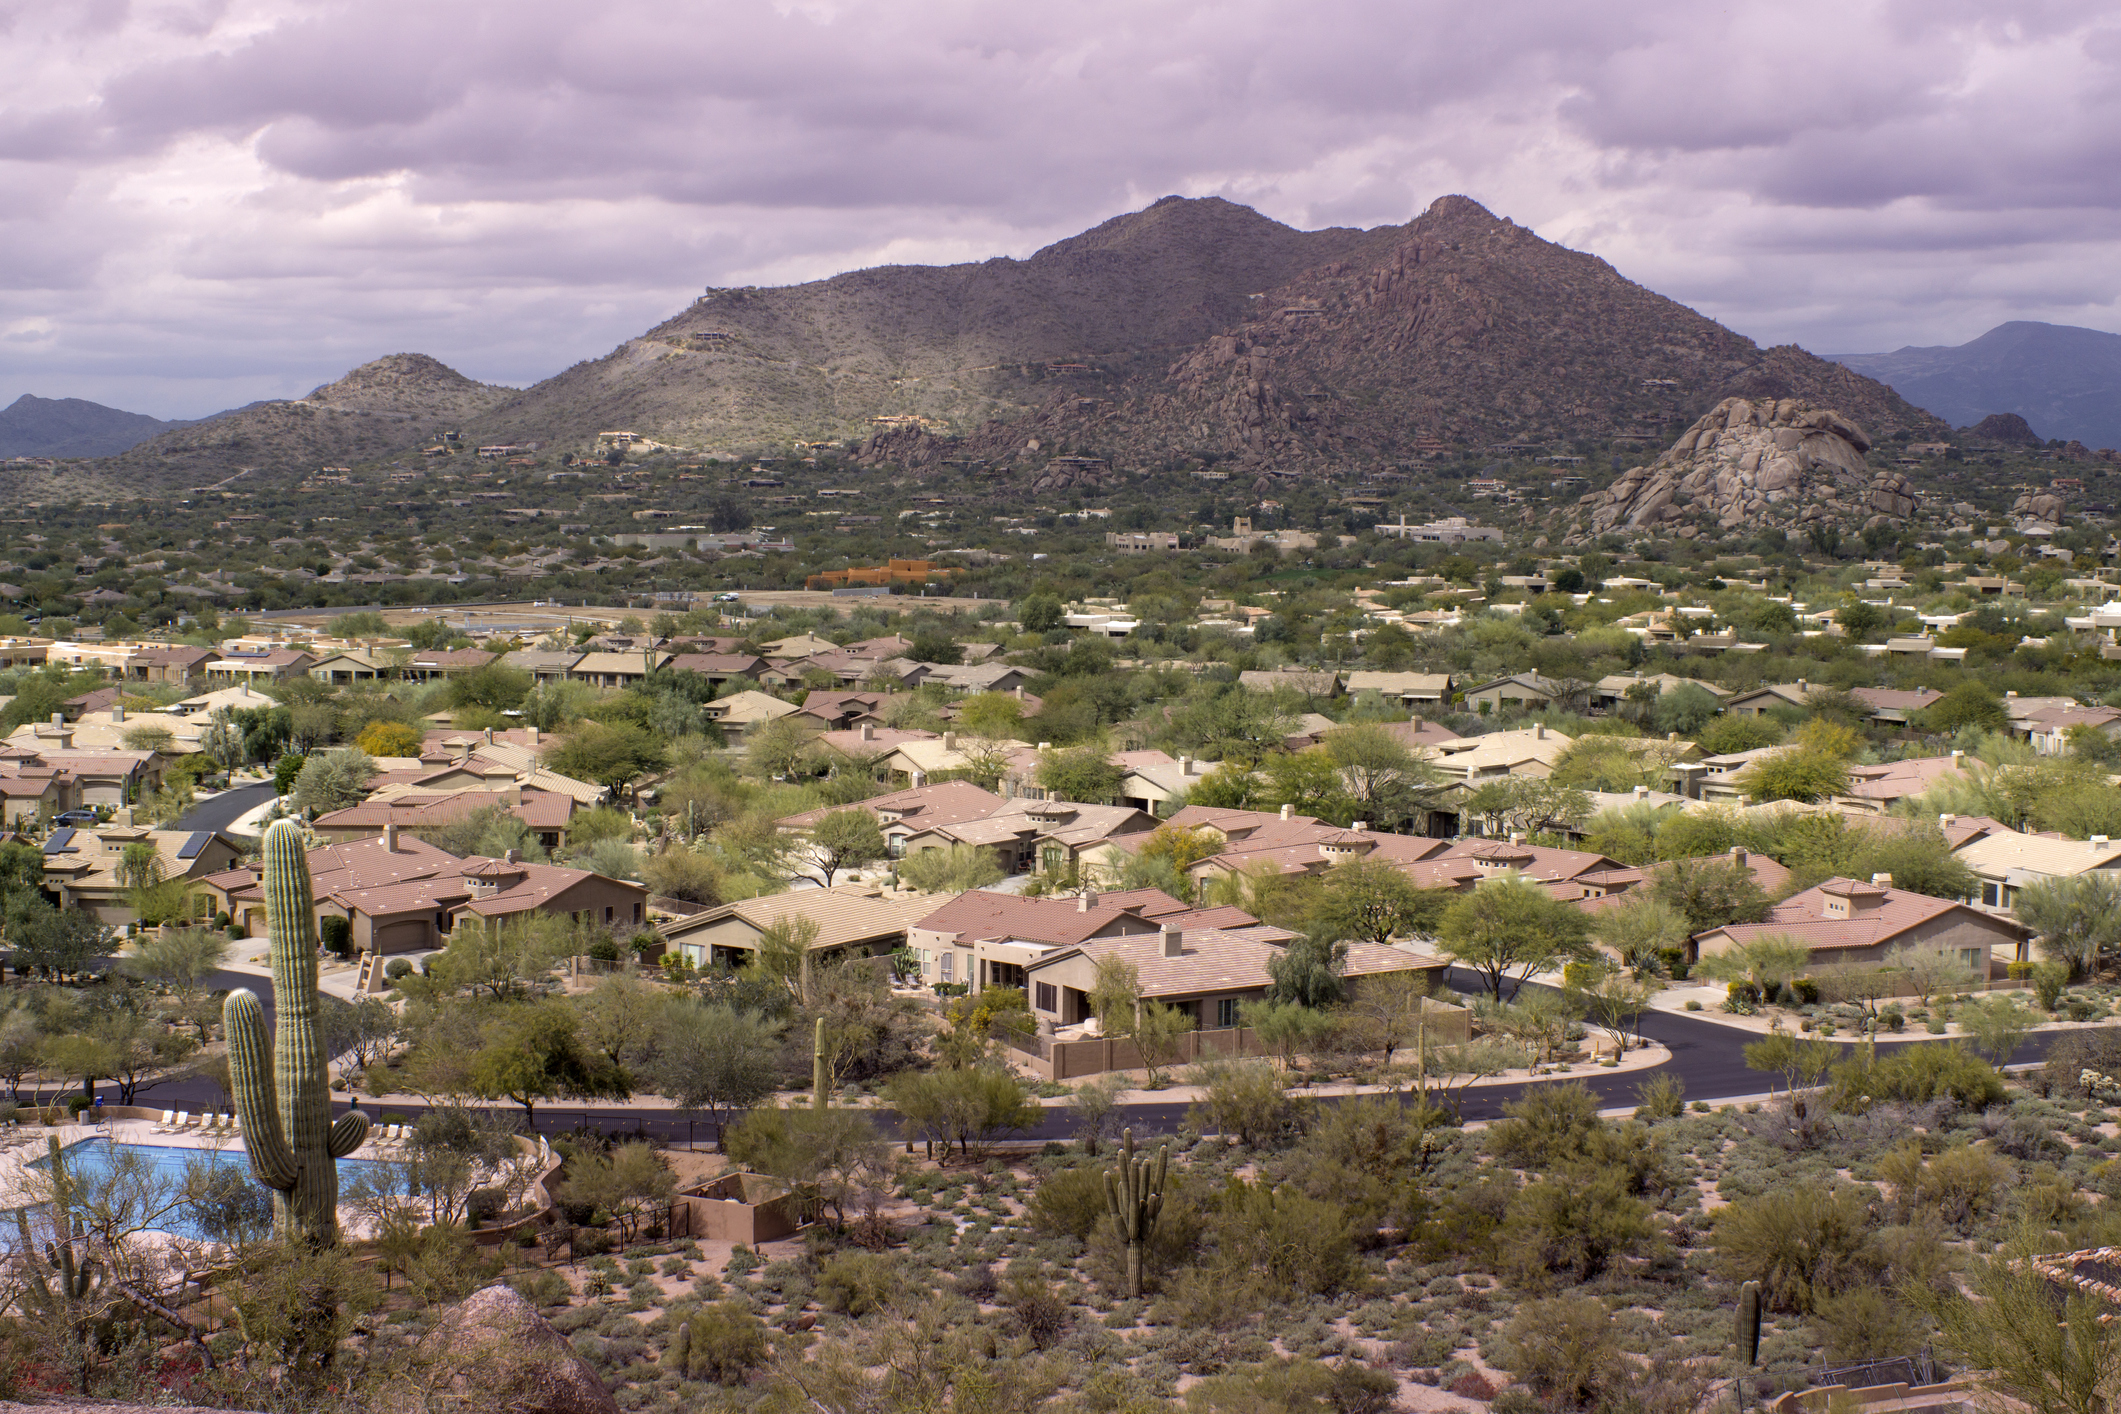 Houses in a Phoenix community